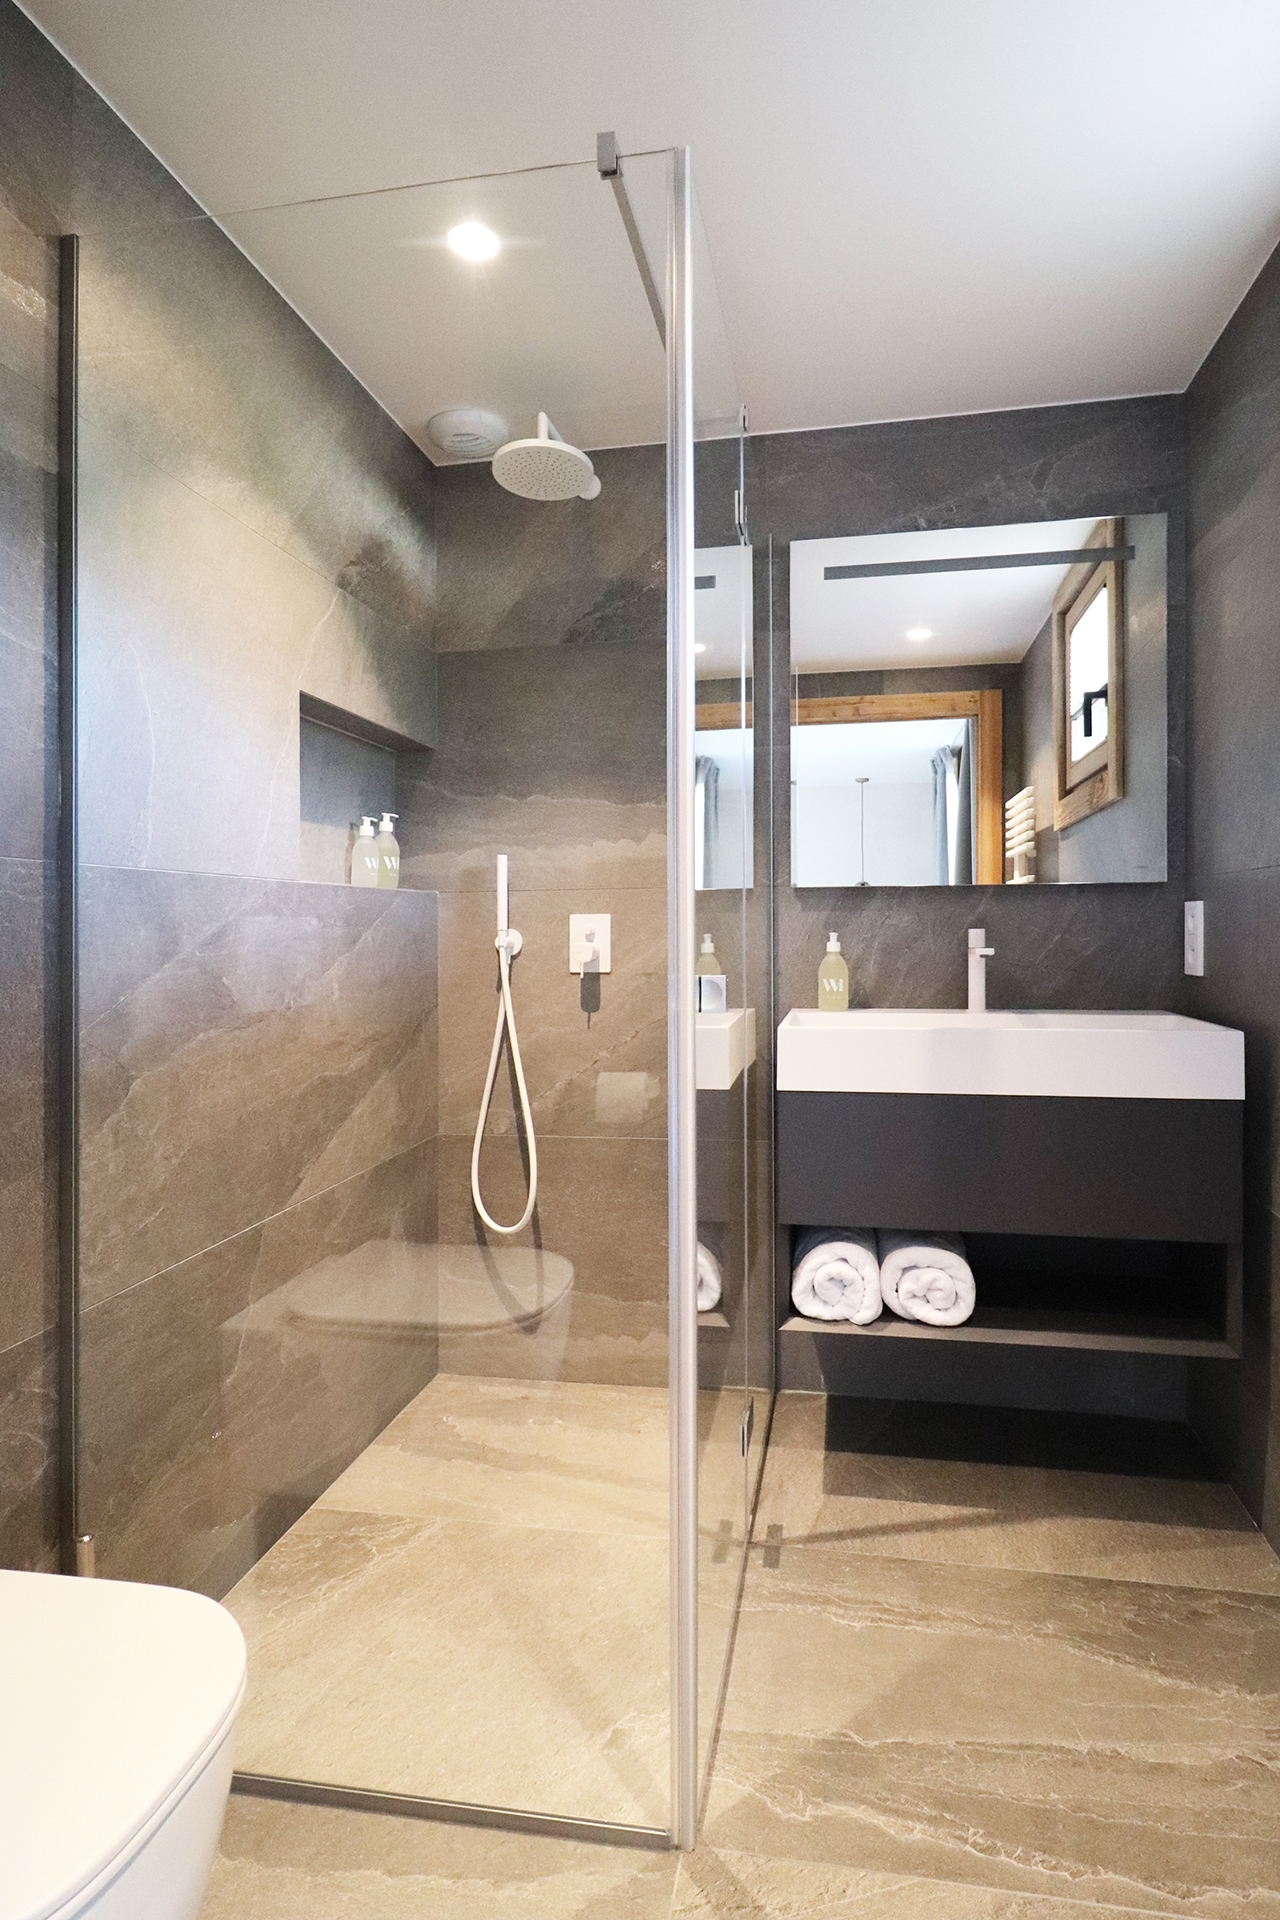 Projet chalet W salle de bain chalet bois moderne luxe